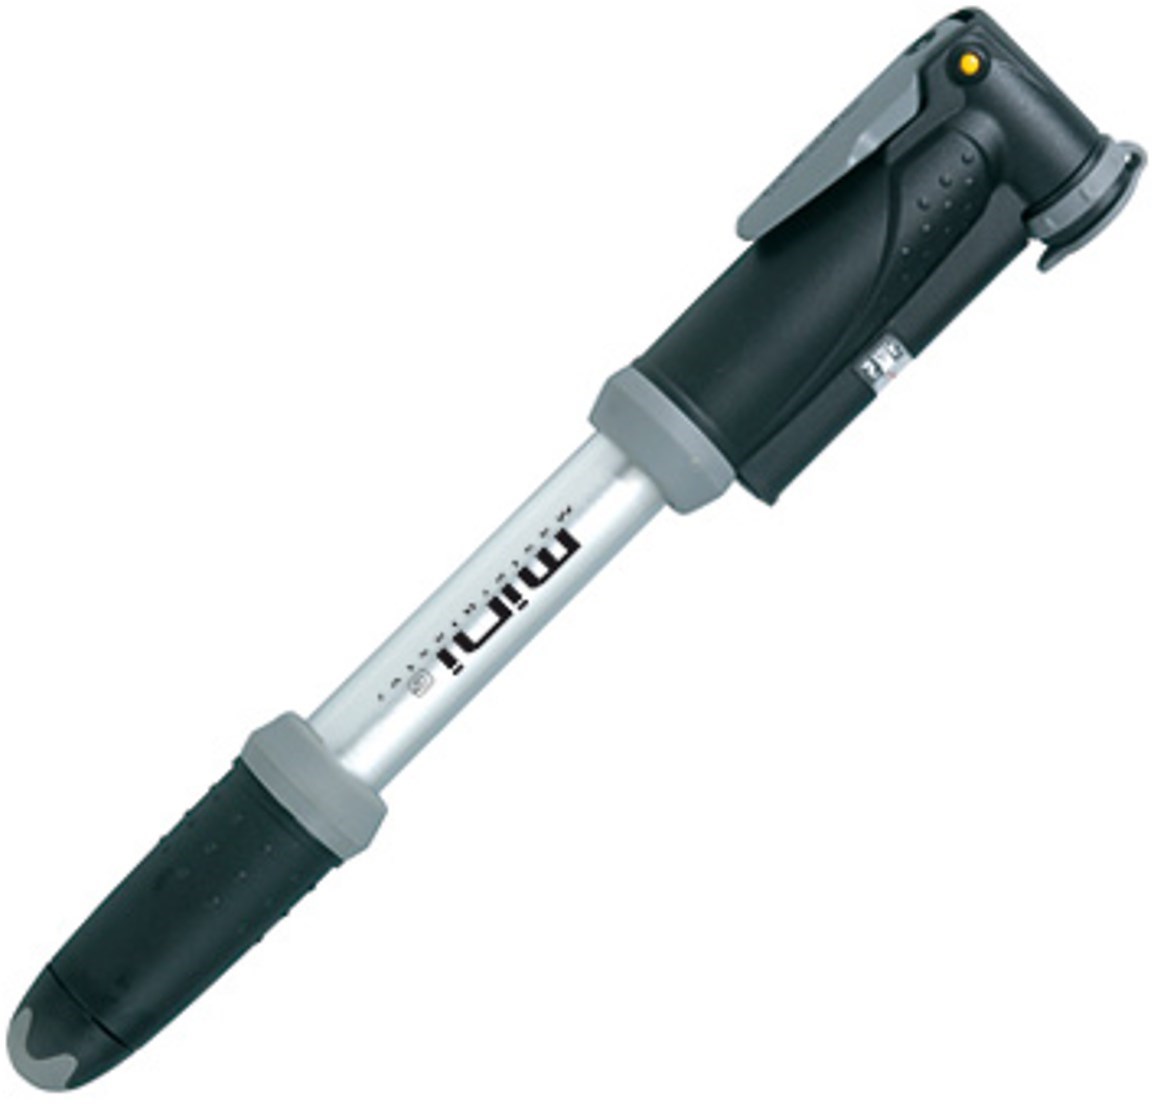 Topeak Mini Master Blaster With Gauge Hand pump product image